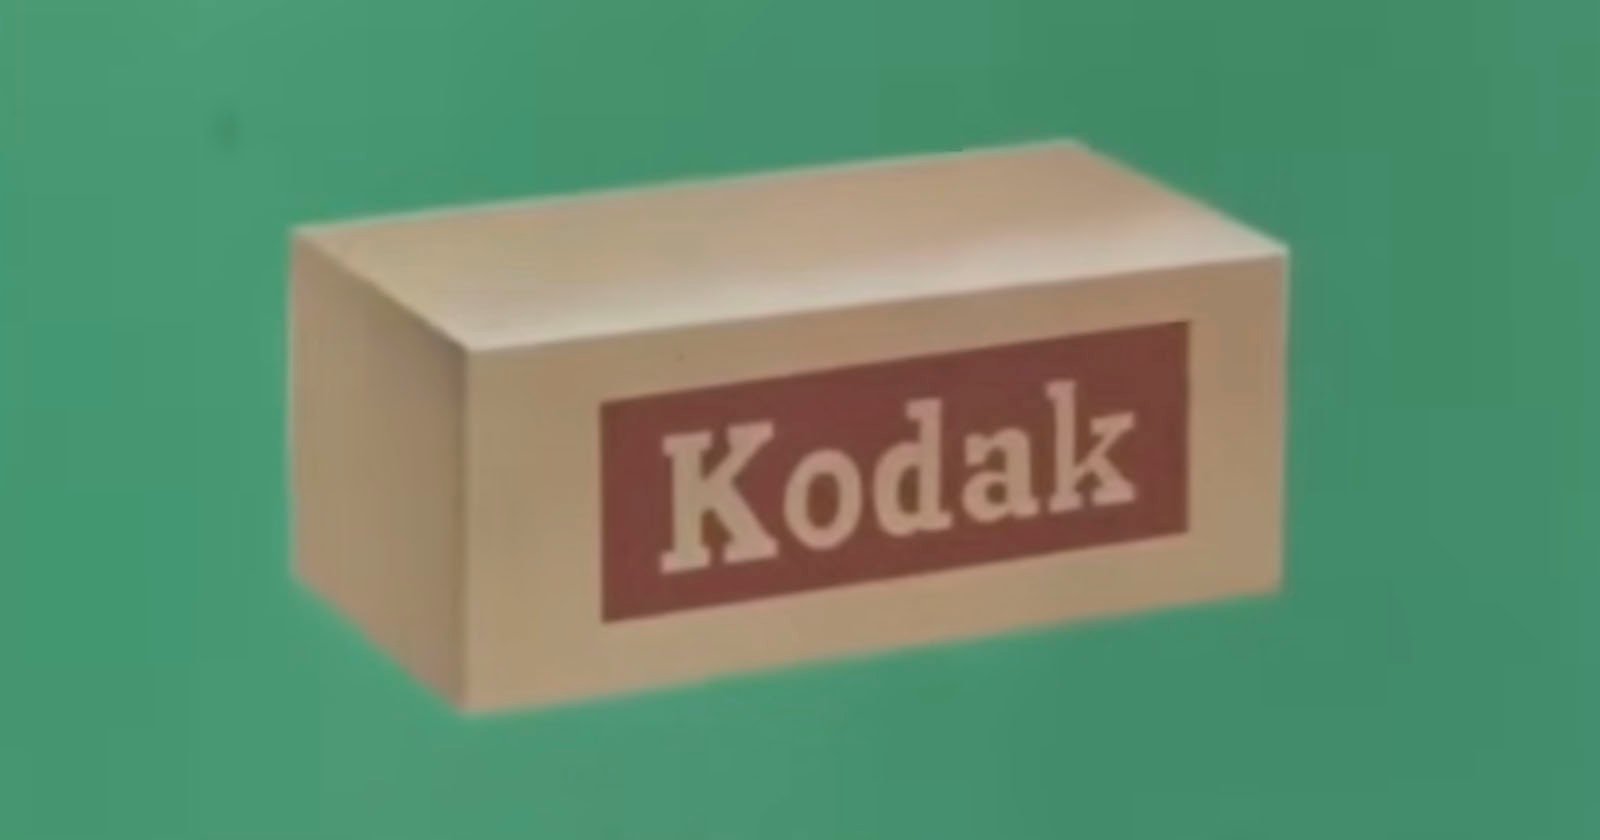  how kodak film was made 1950s 